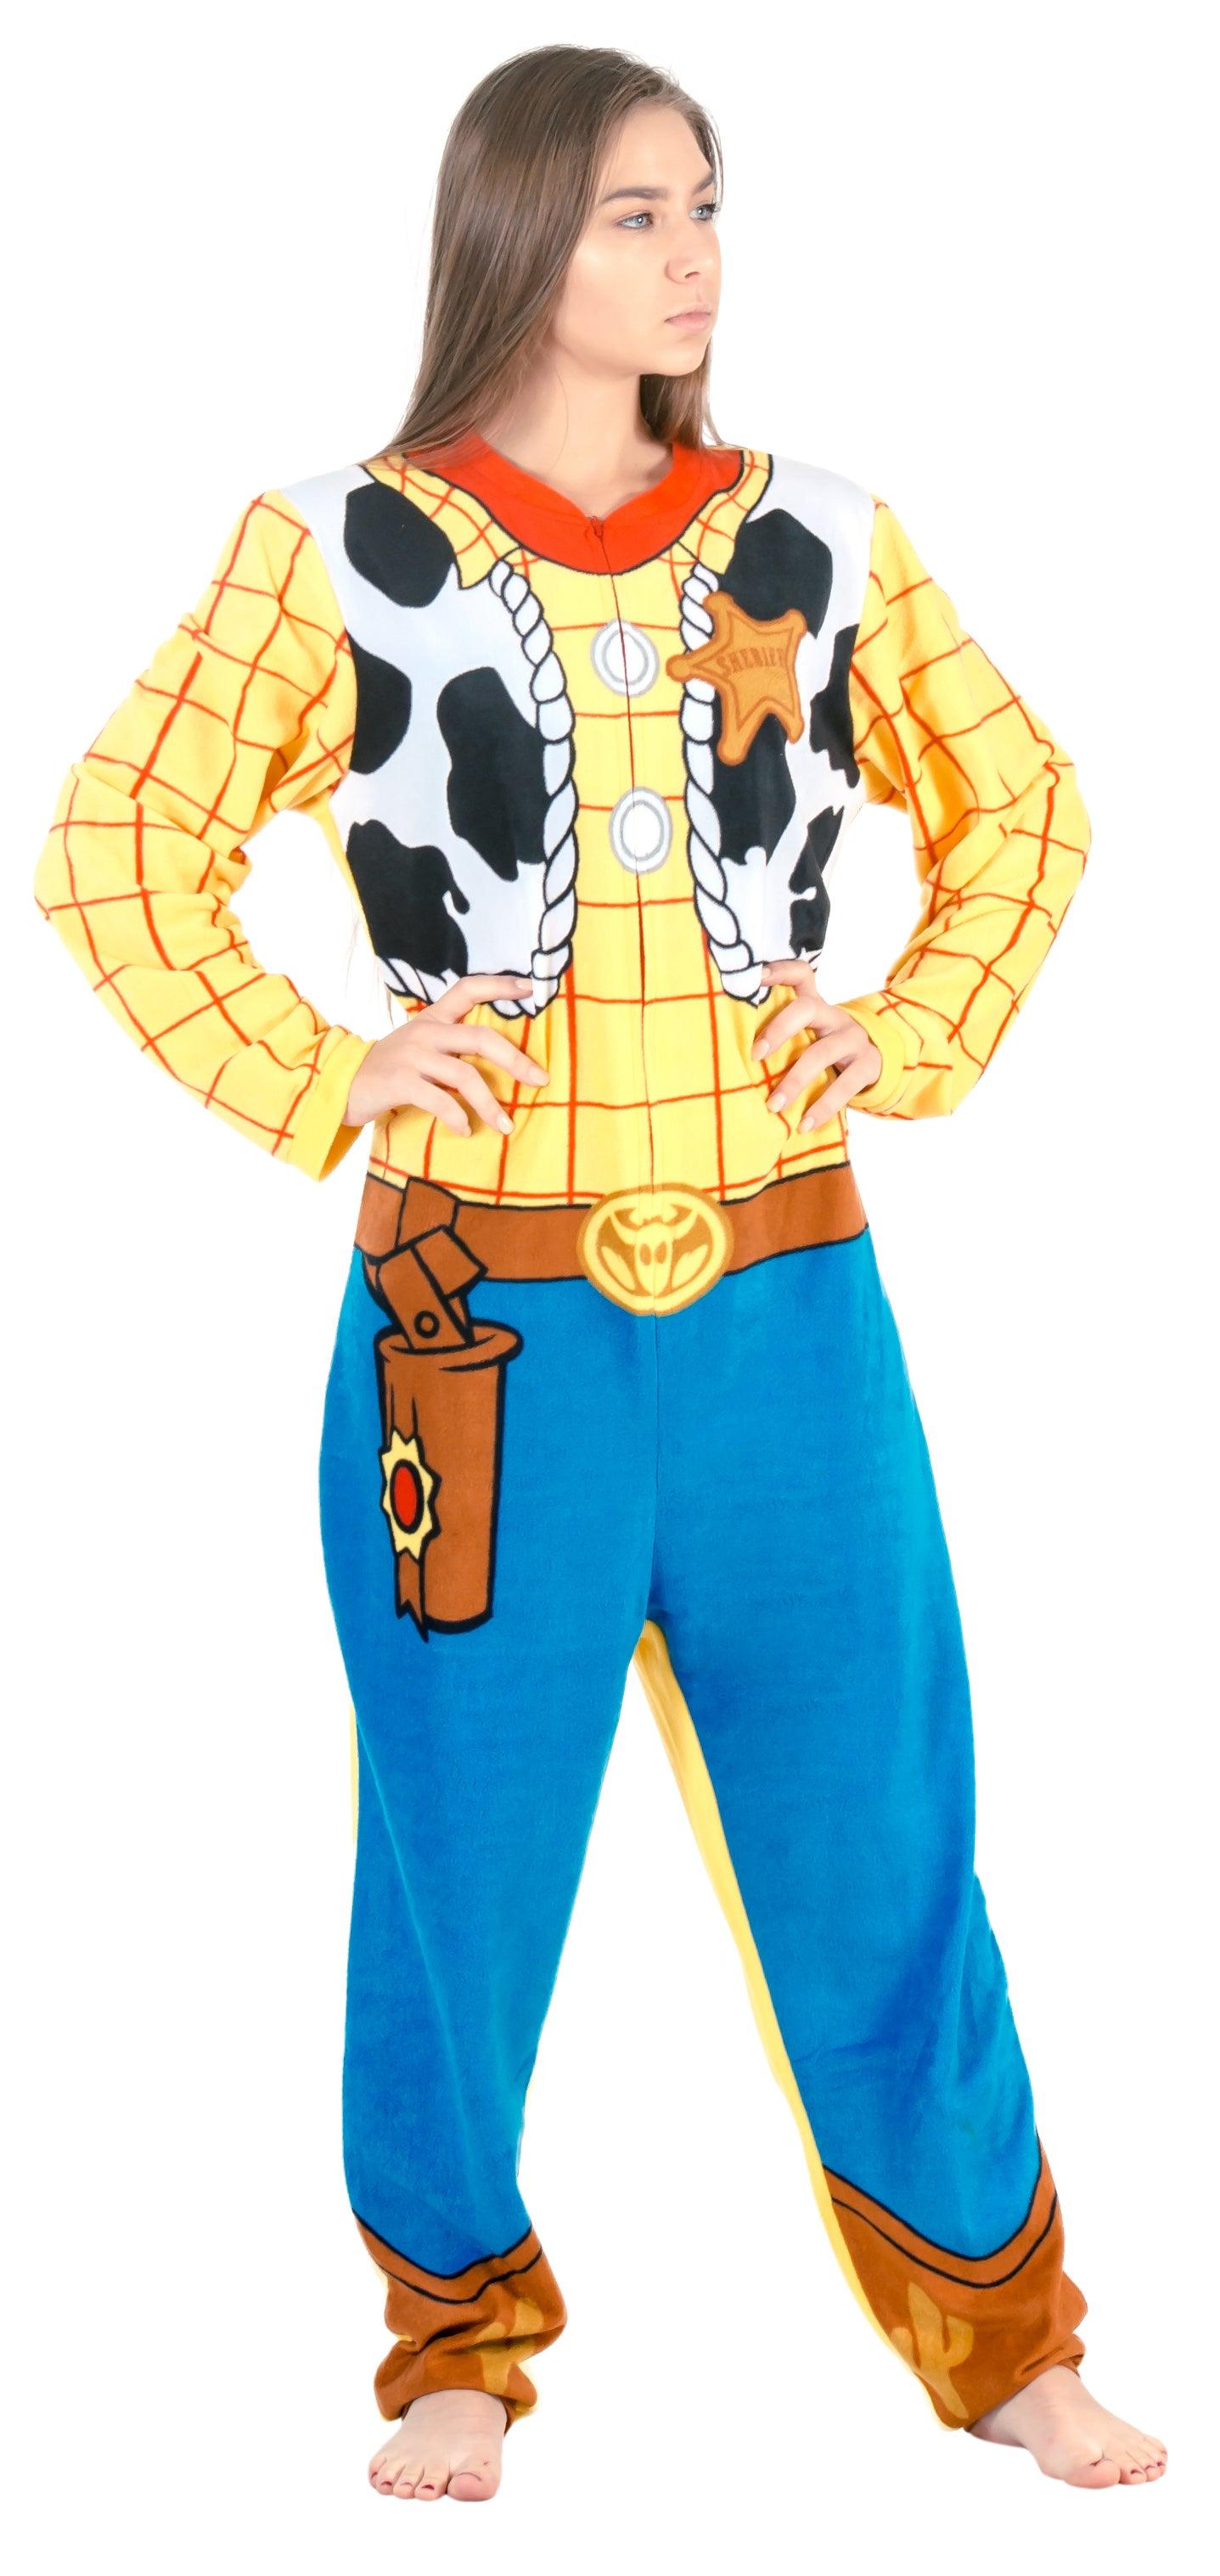 Toy Story Sheriff Woody Union Suit Costume Pajama - TVStoreOnline